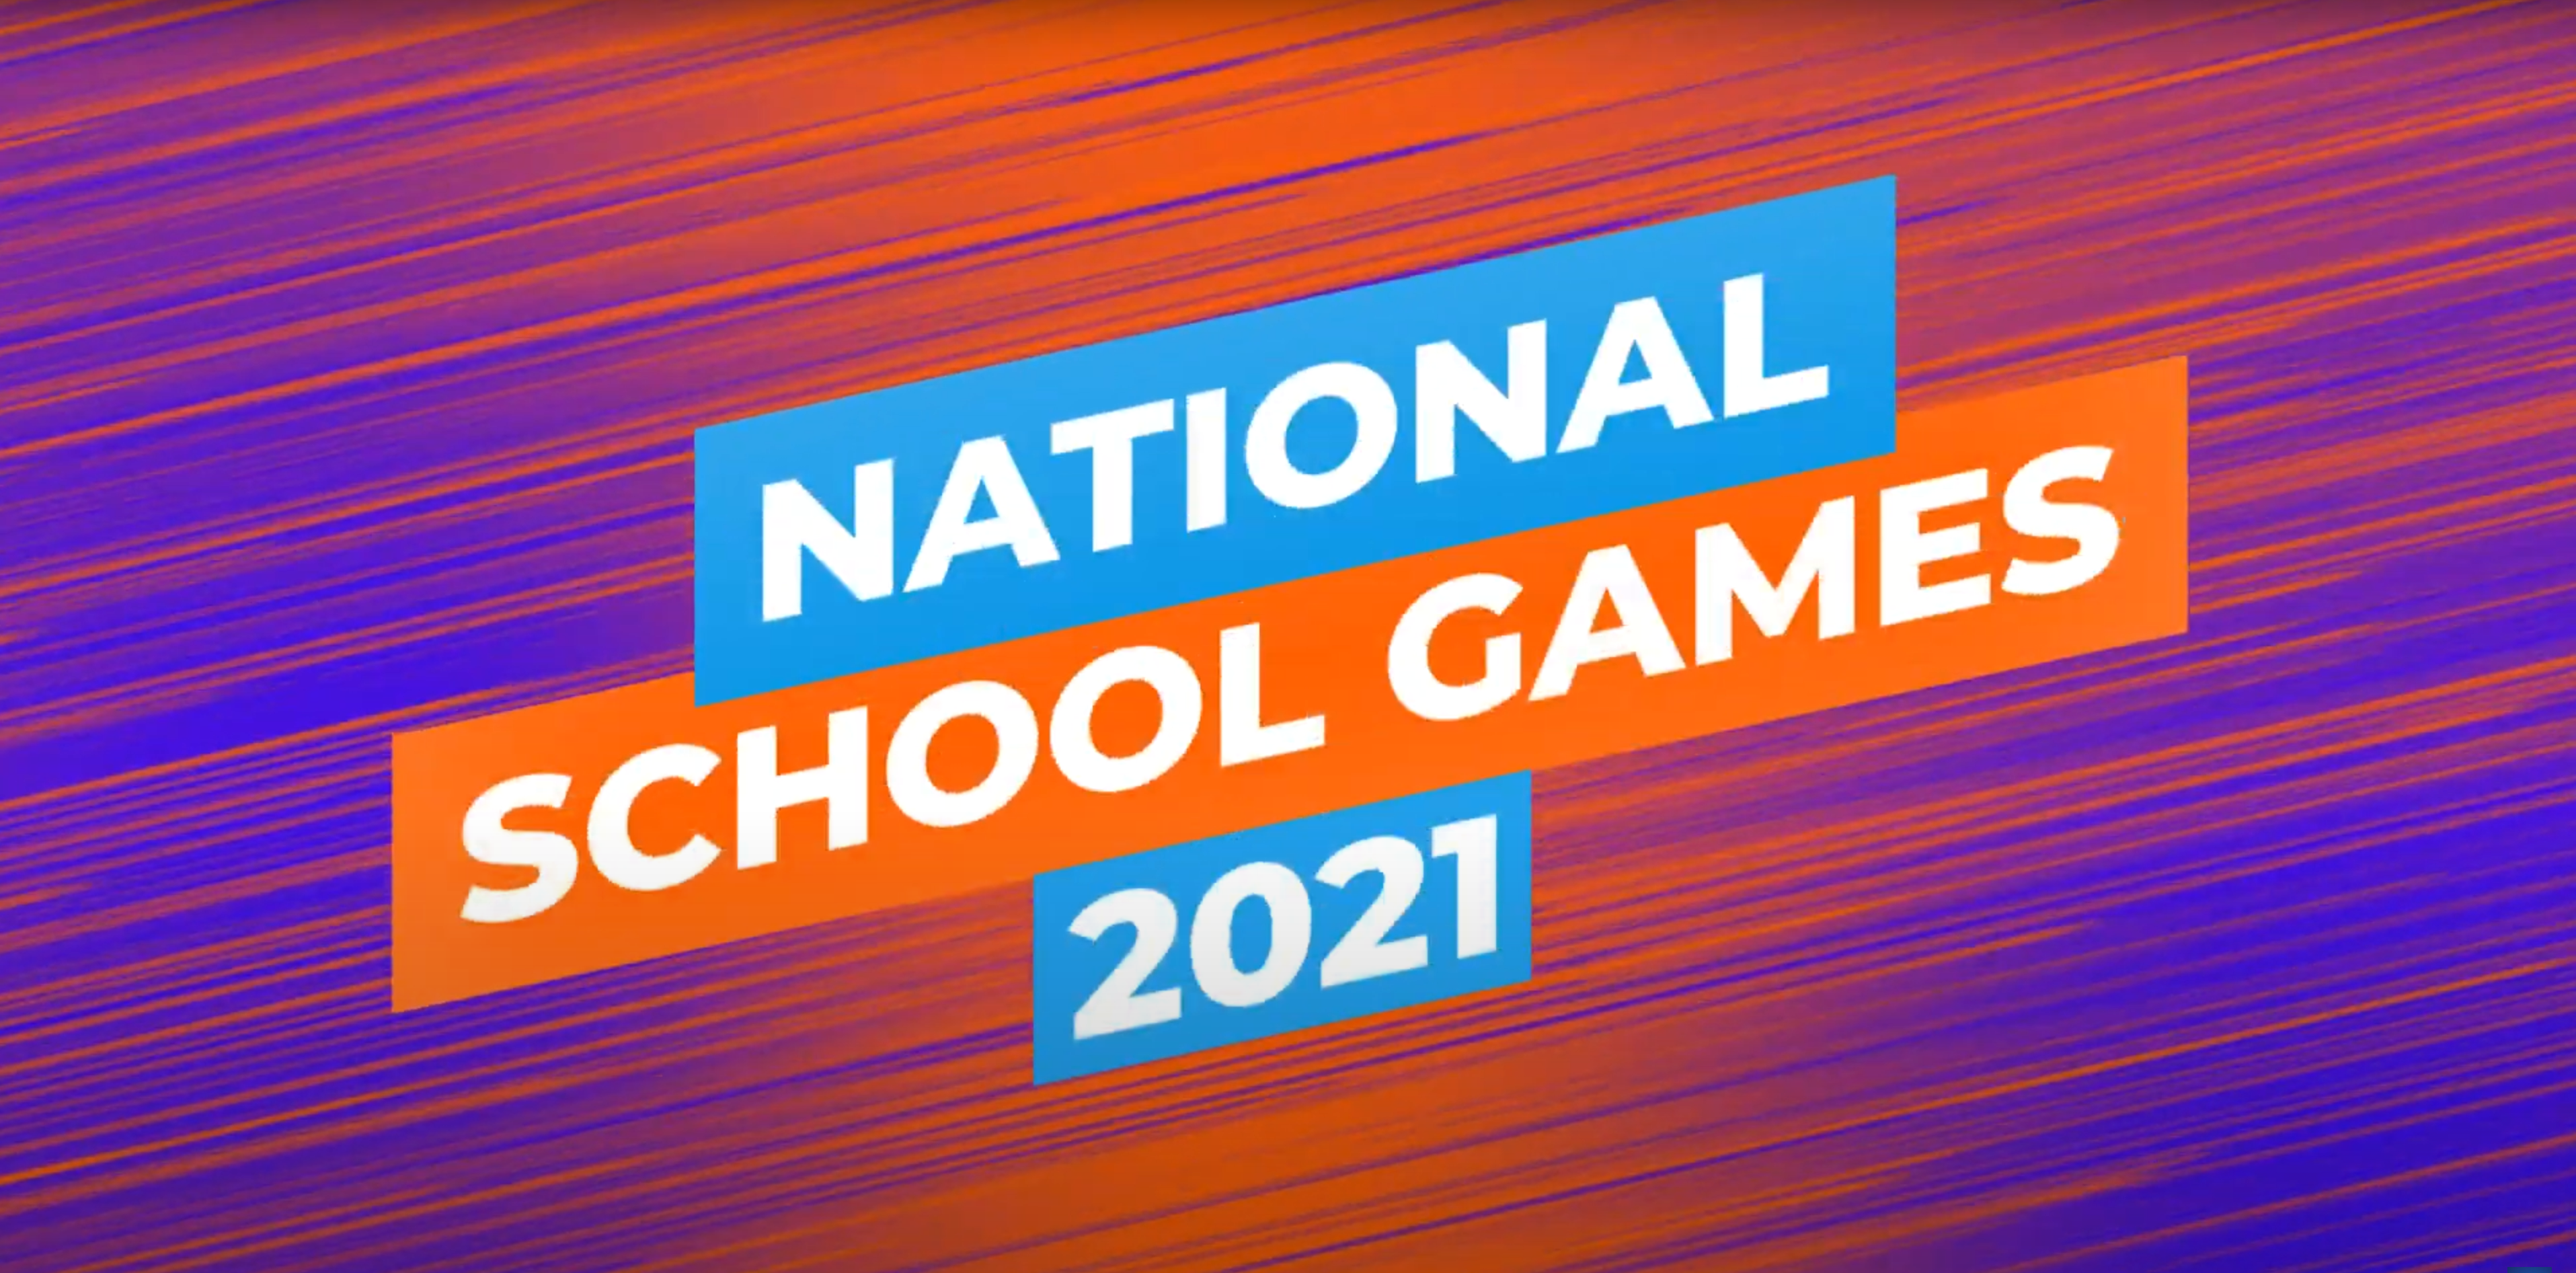 National School Games 2021 | Shooting | Highlights